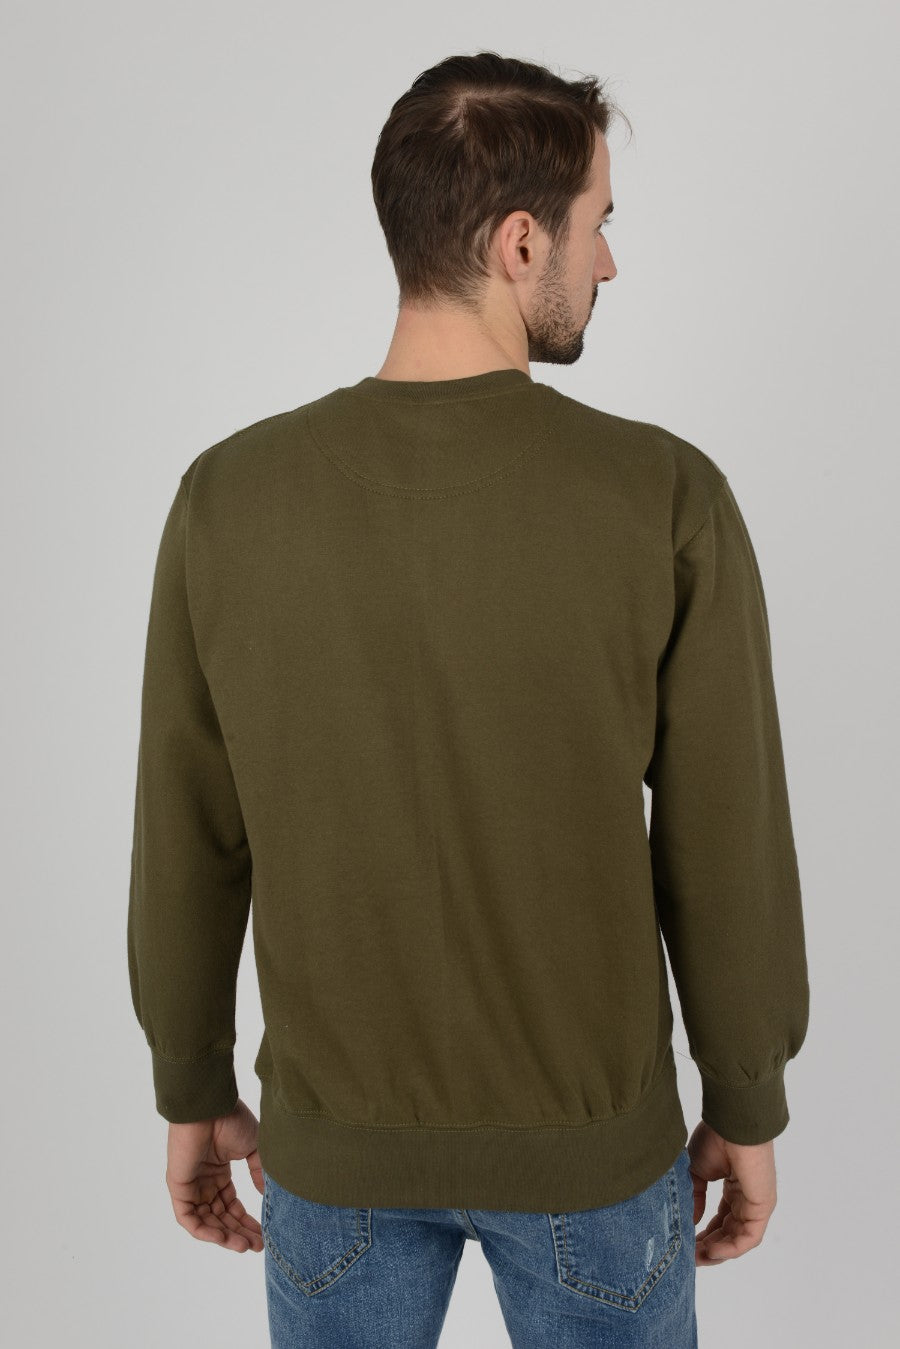 Mens-Plain-Fleece-Sweatshirt-Casual-Olive-Green